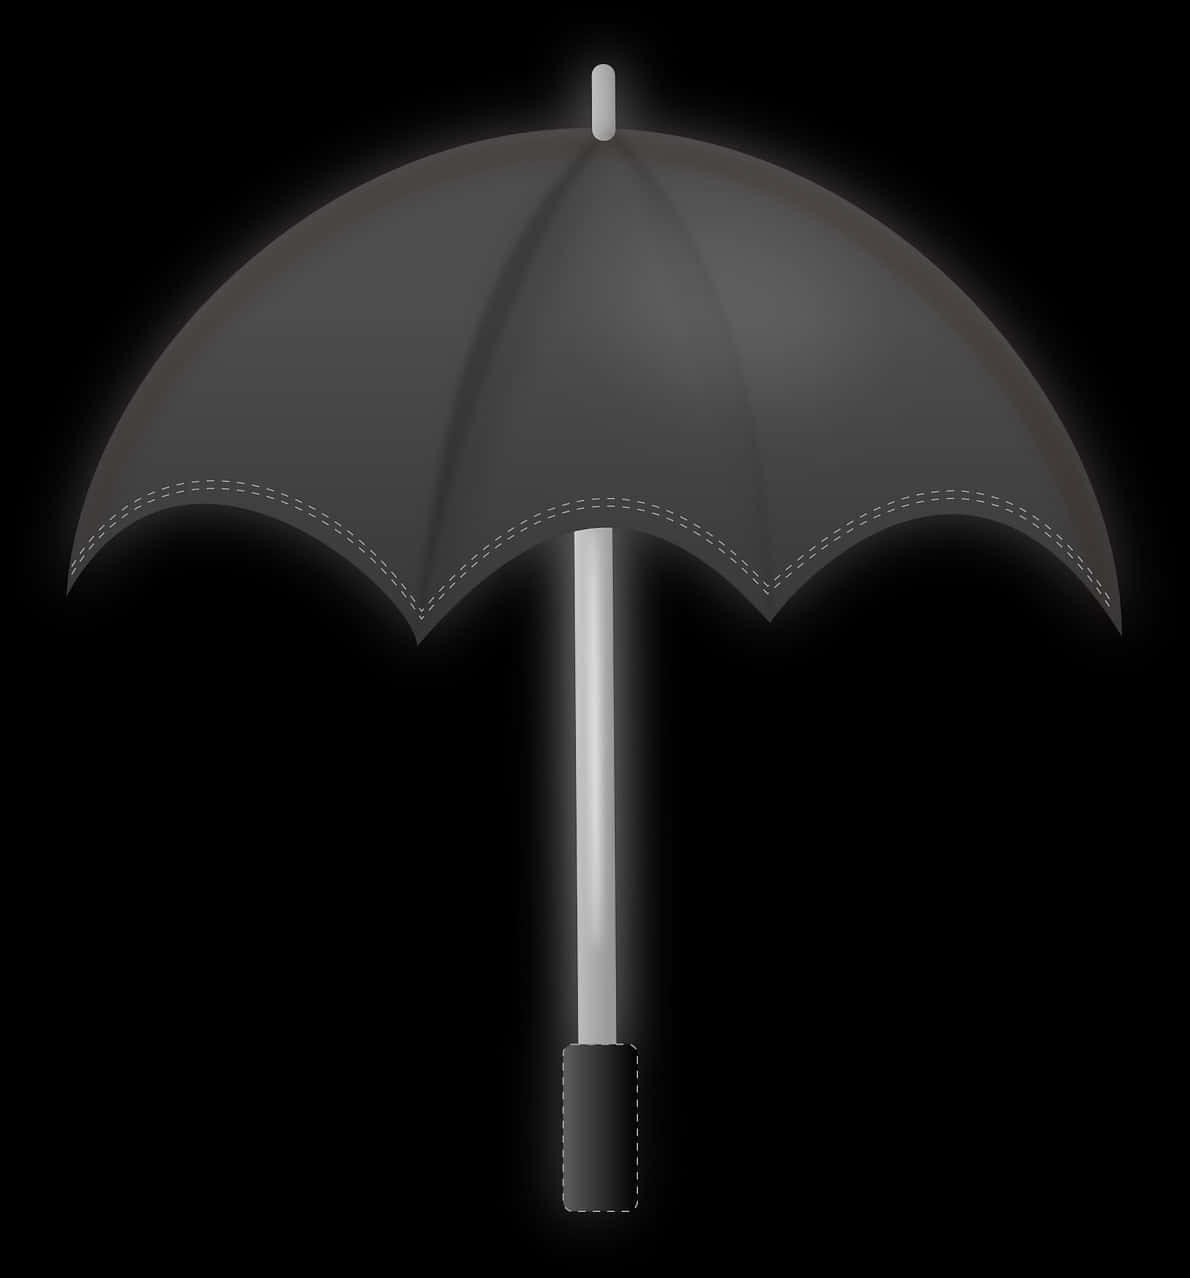 A Black Umbrella With A White Handle